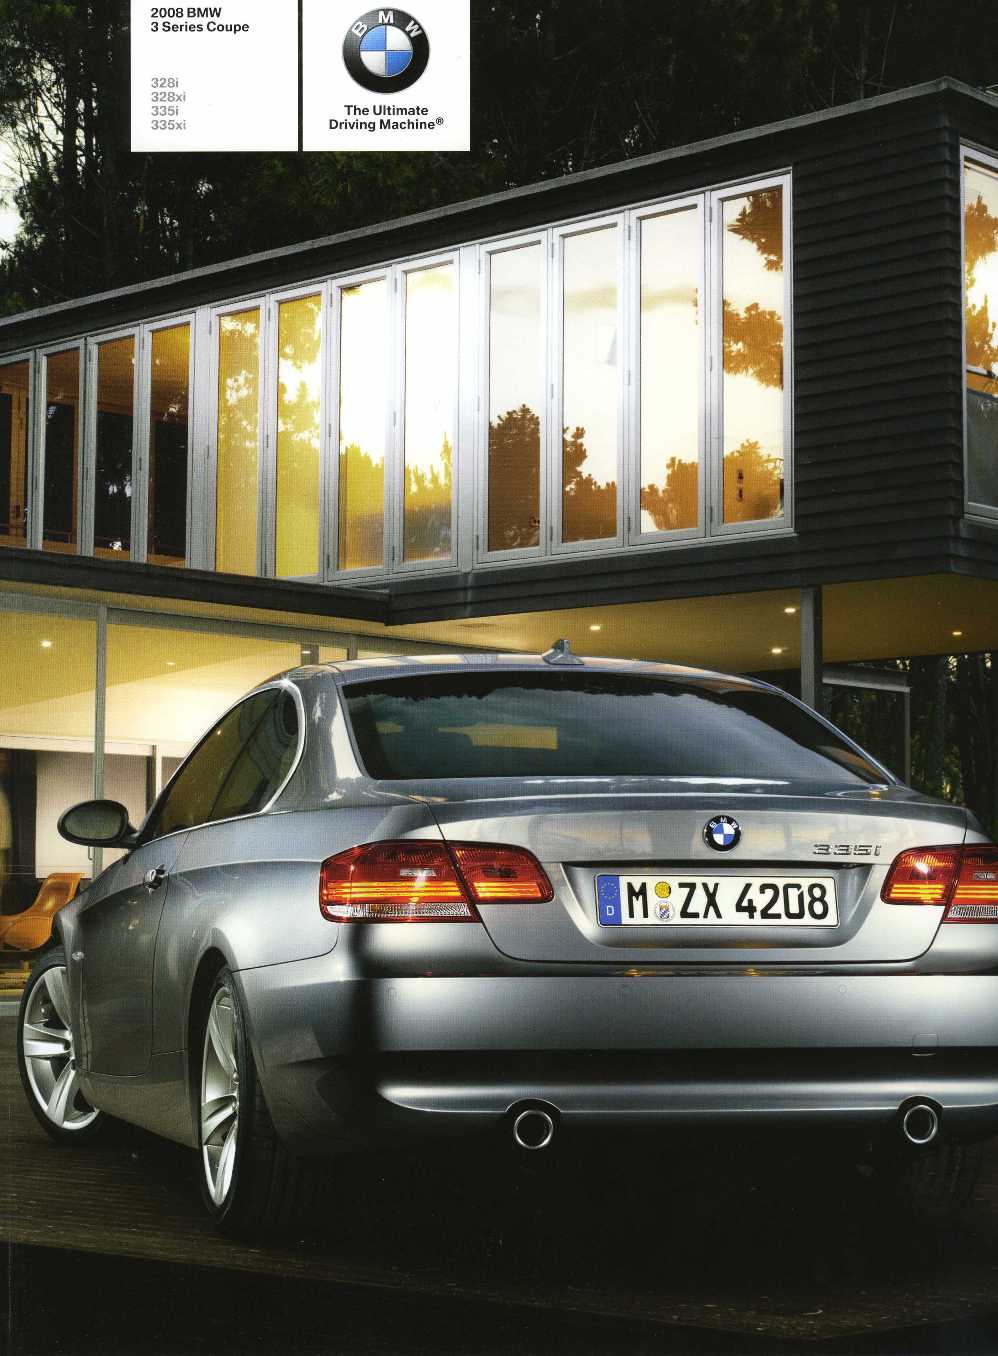 Brochure - 2008 BMW 3 Series Coupe 328i 328xi 335i 335xi - E92 (2nd version)